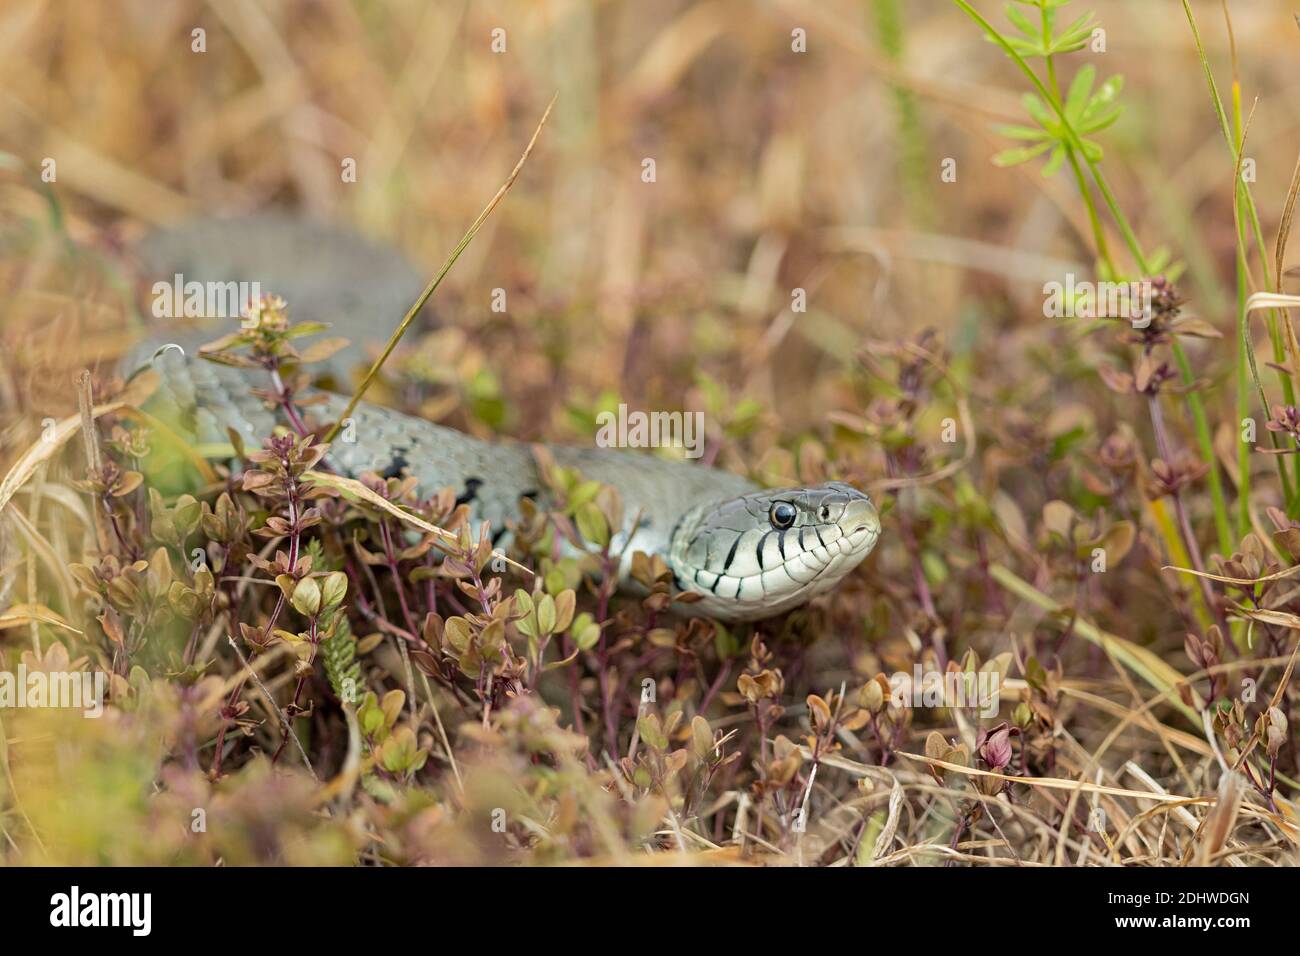 A Grass Snake on hunt Stock Photo